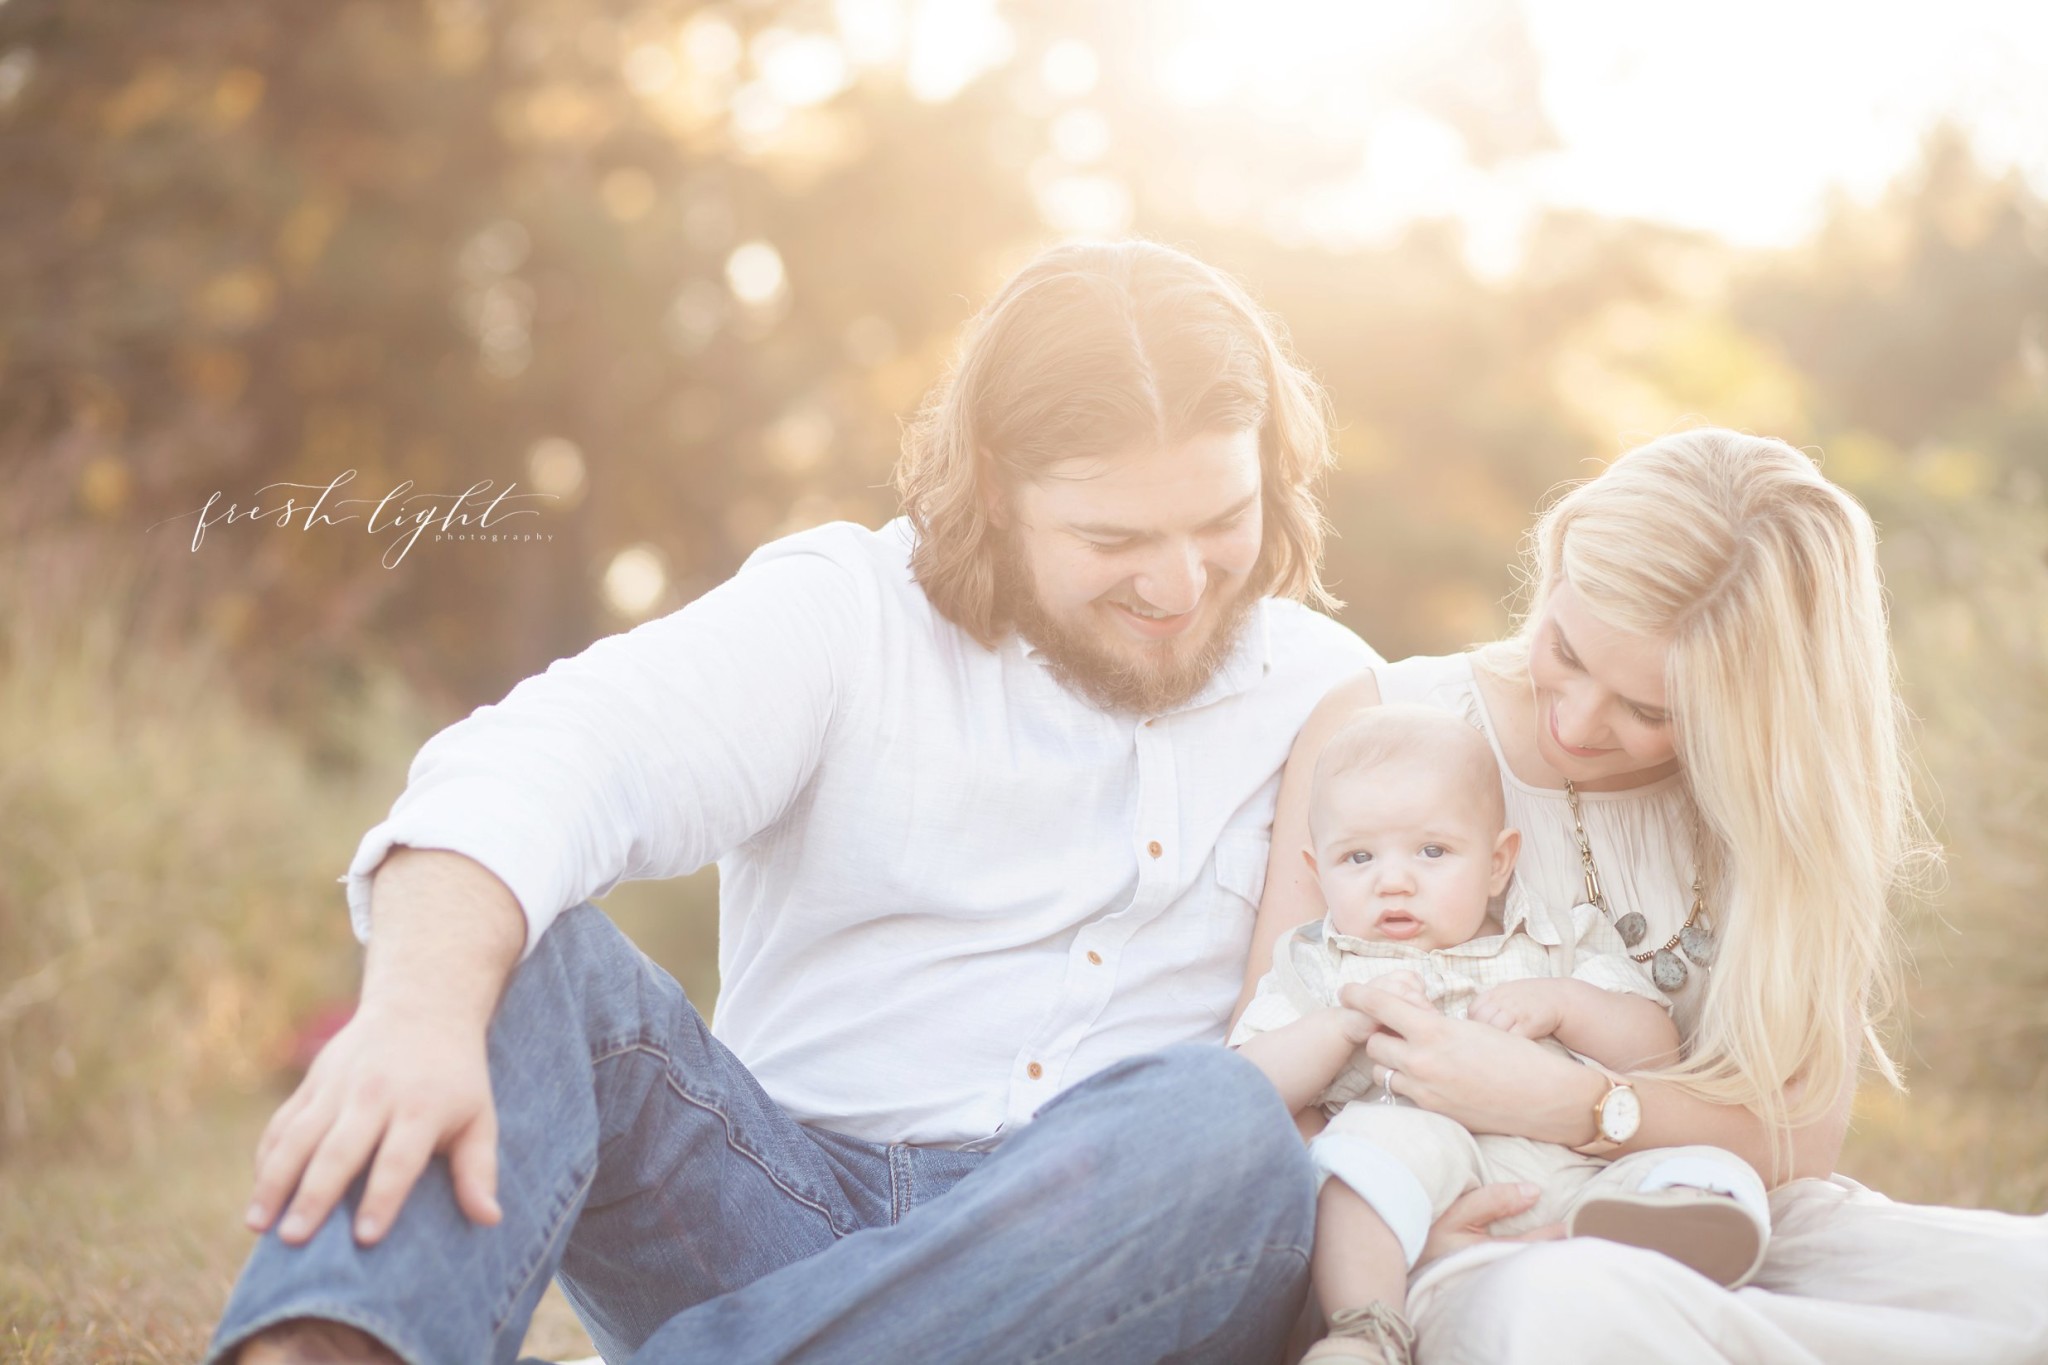  Houston Family Photographer | Fresh Light Photography